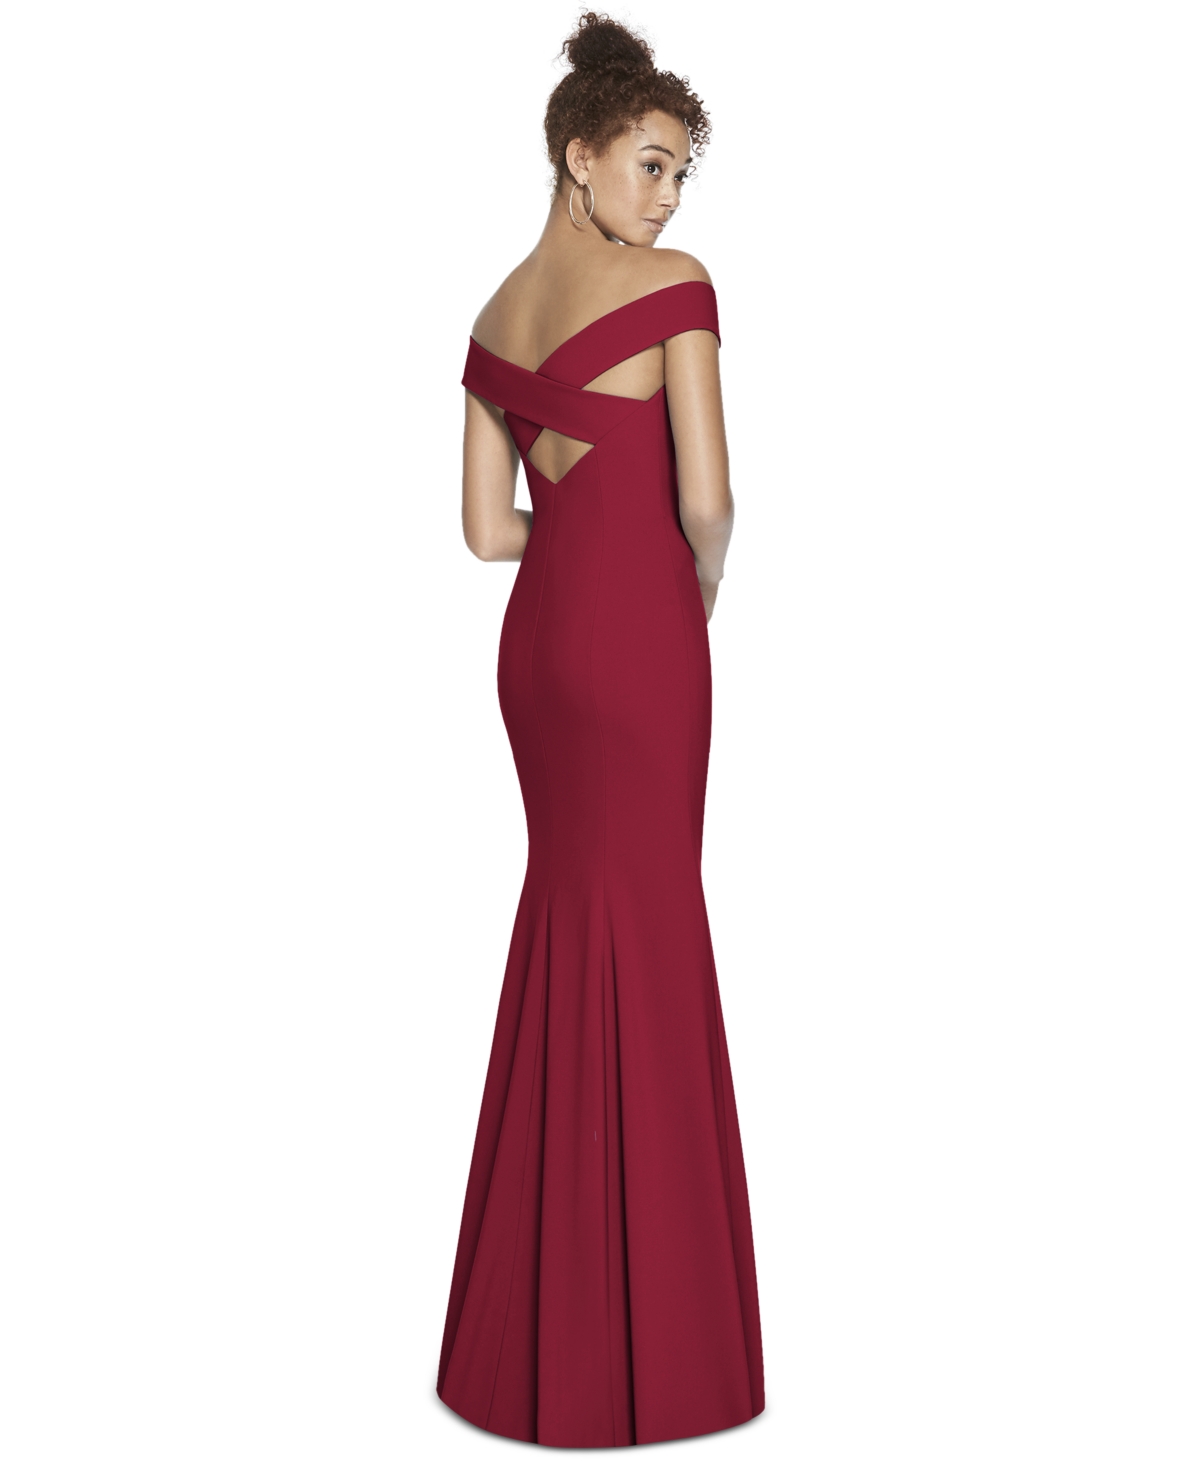 Off-The-Shoulder Maxi Dress - Burgundy Red